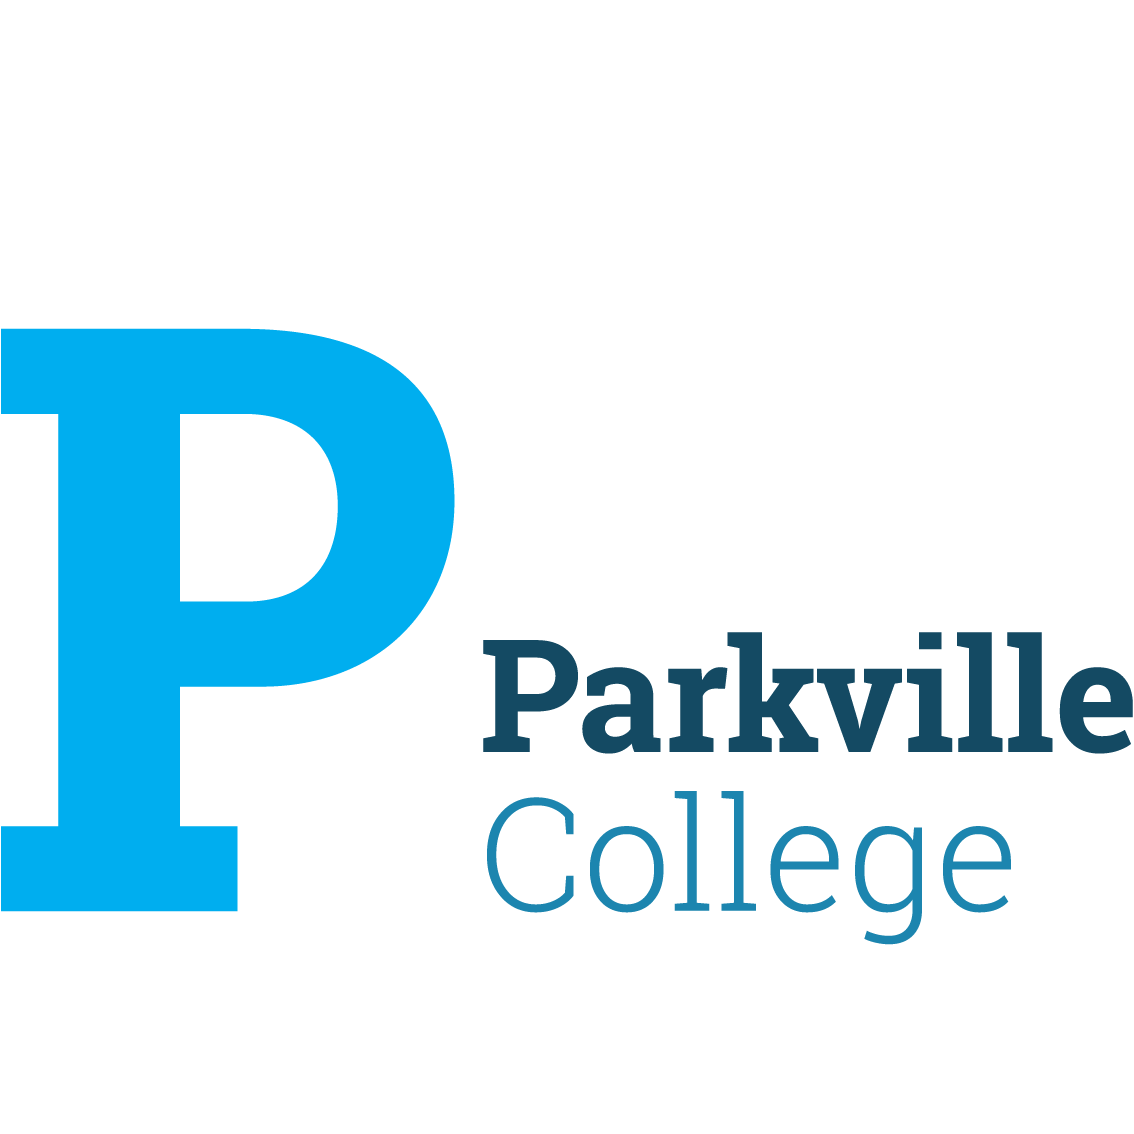 Parkville College, specialist Victorian Government School.